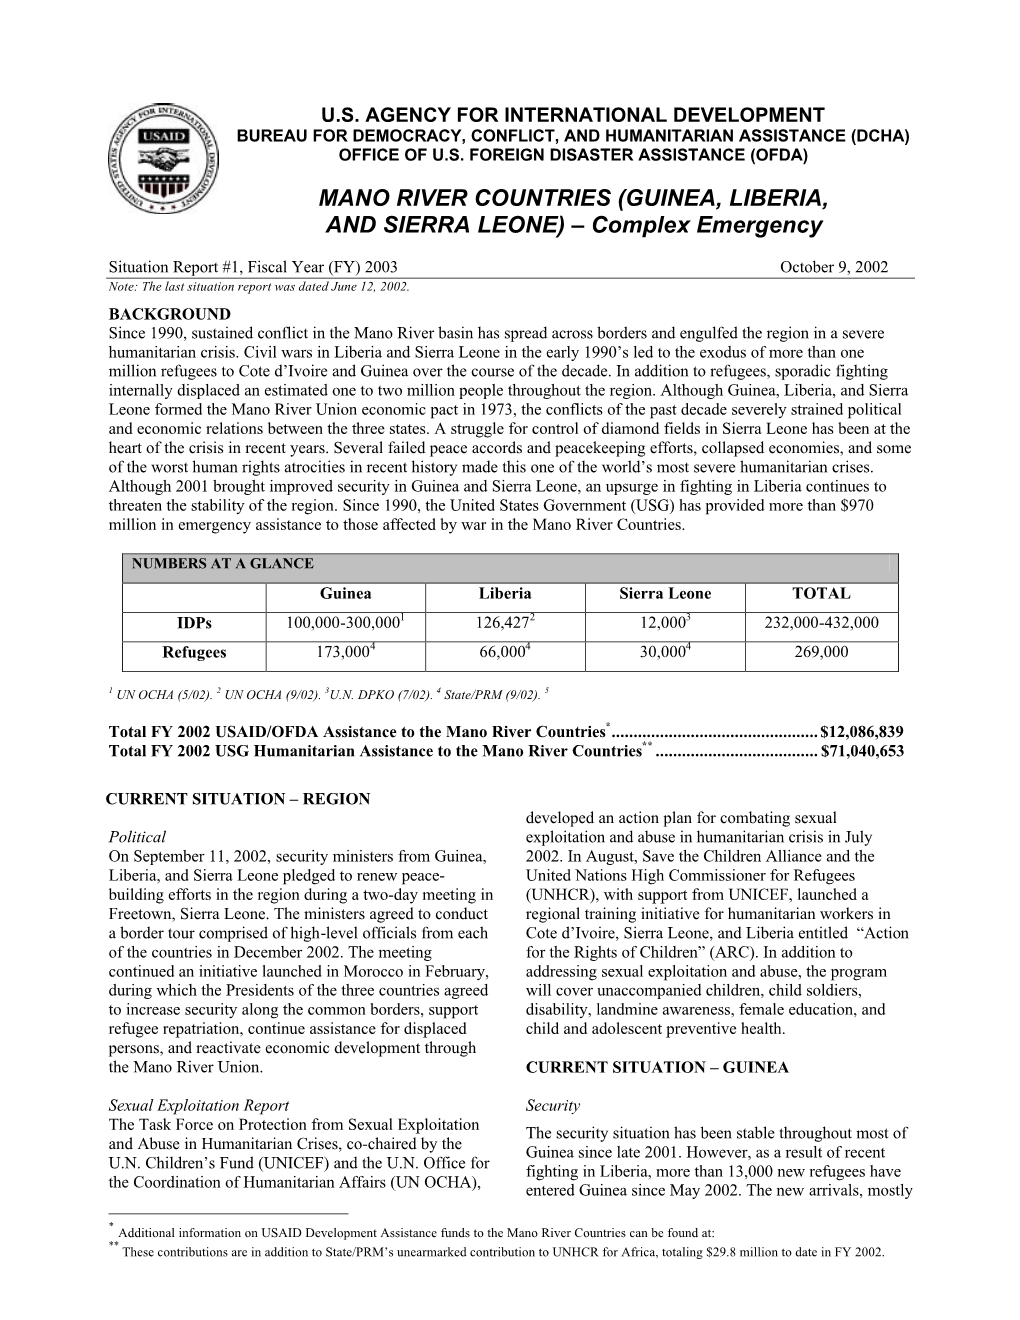 MANO RIVER COUNTRIES (GUINEA, LIBERIA, and SIERRA LEONE) – Complex Emergency